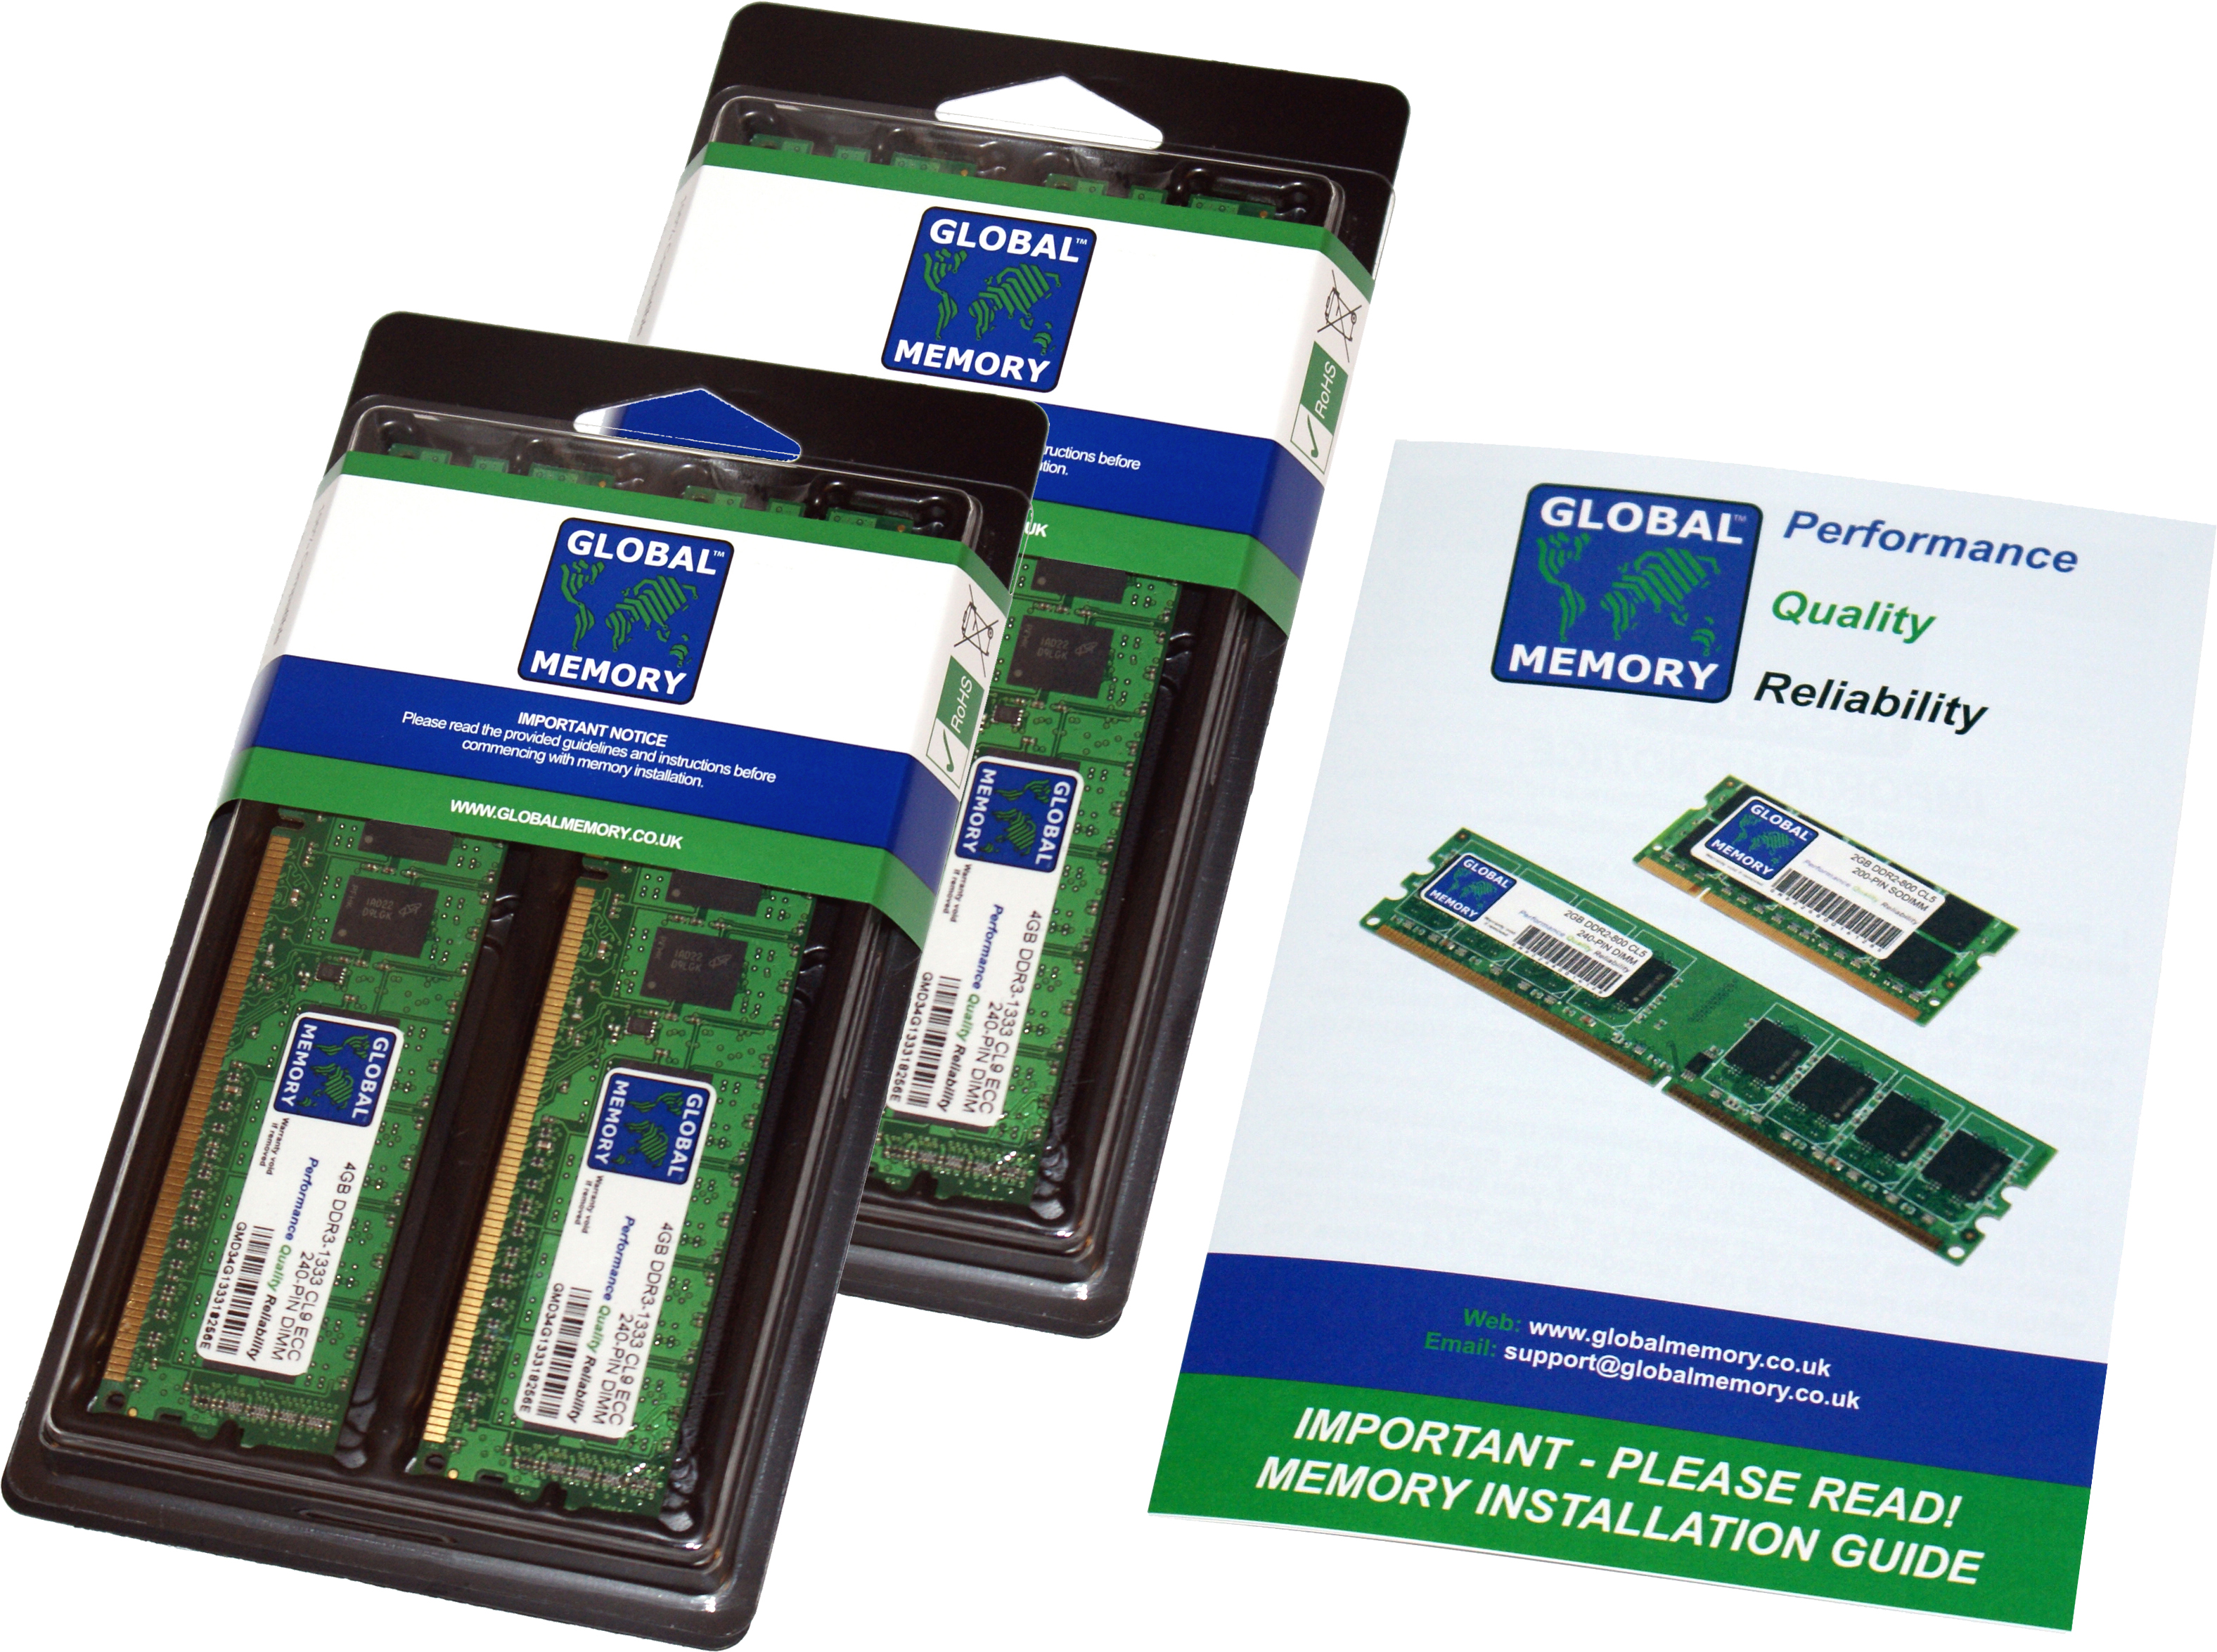 16GB (4 x 4GB) DDR4 2133MHz PC4-17000 288-PIN DIMM MEMORY RAM KIT FOR PACKARD BELL PC DESKTOPS